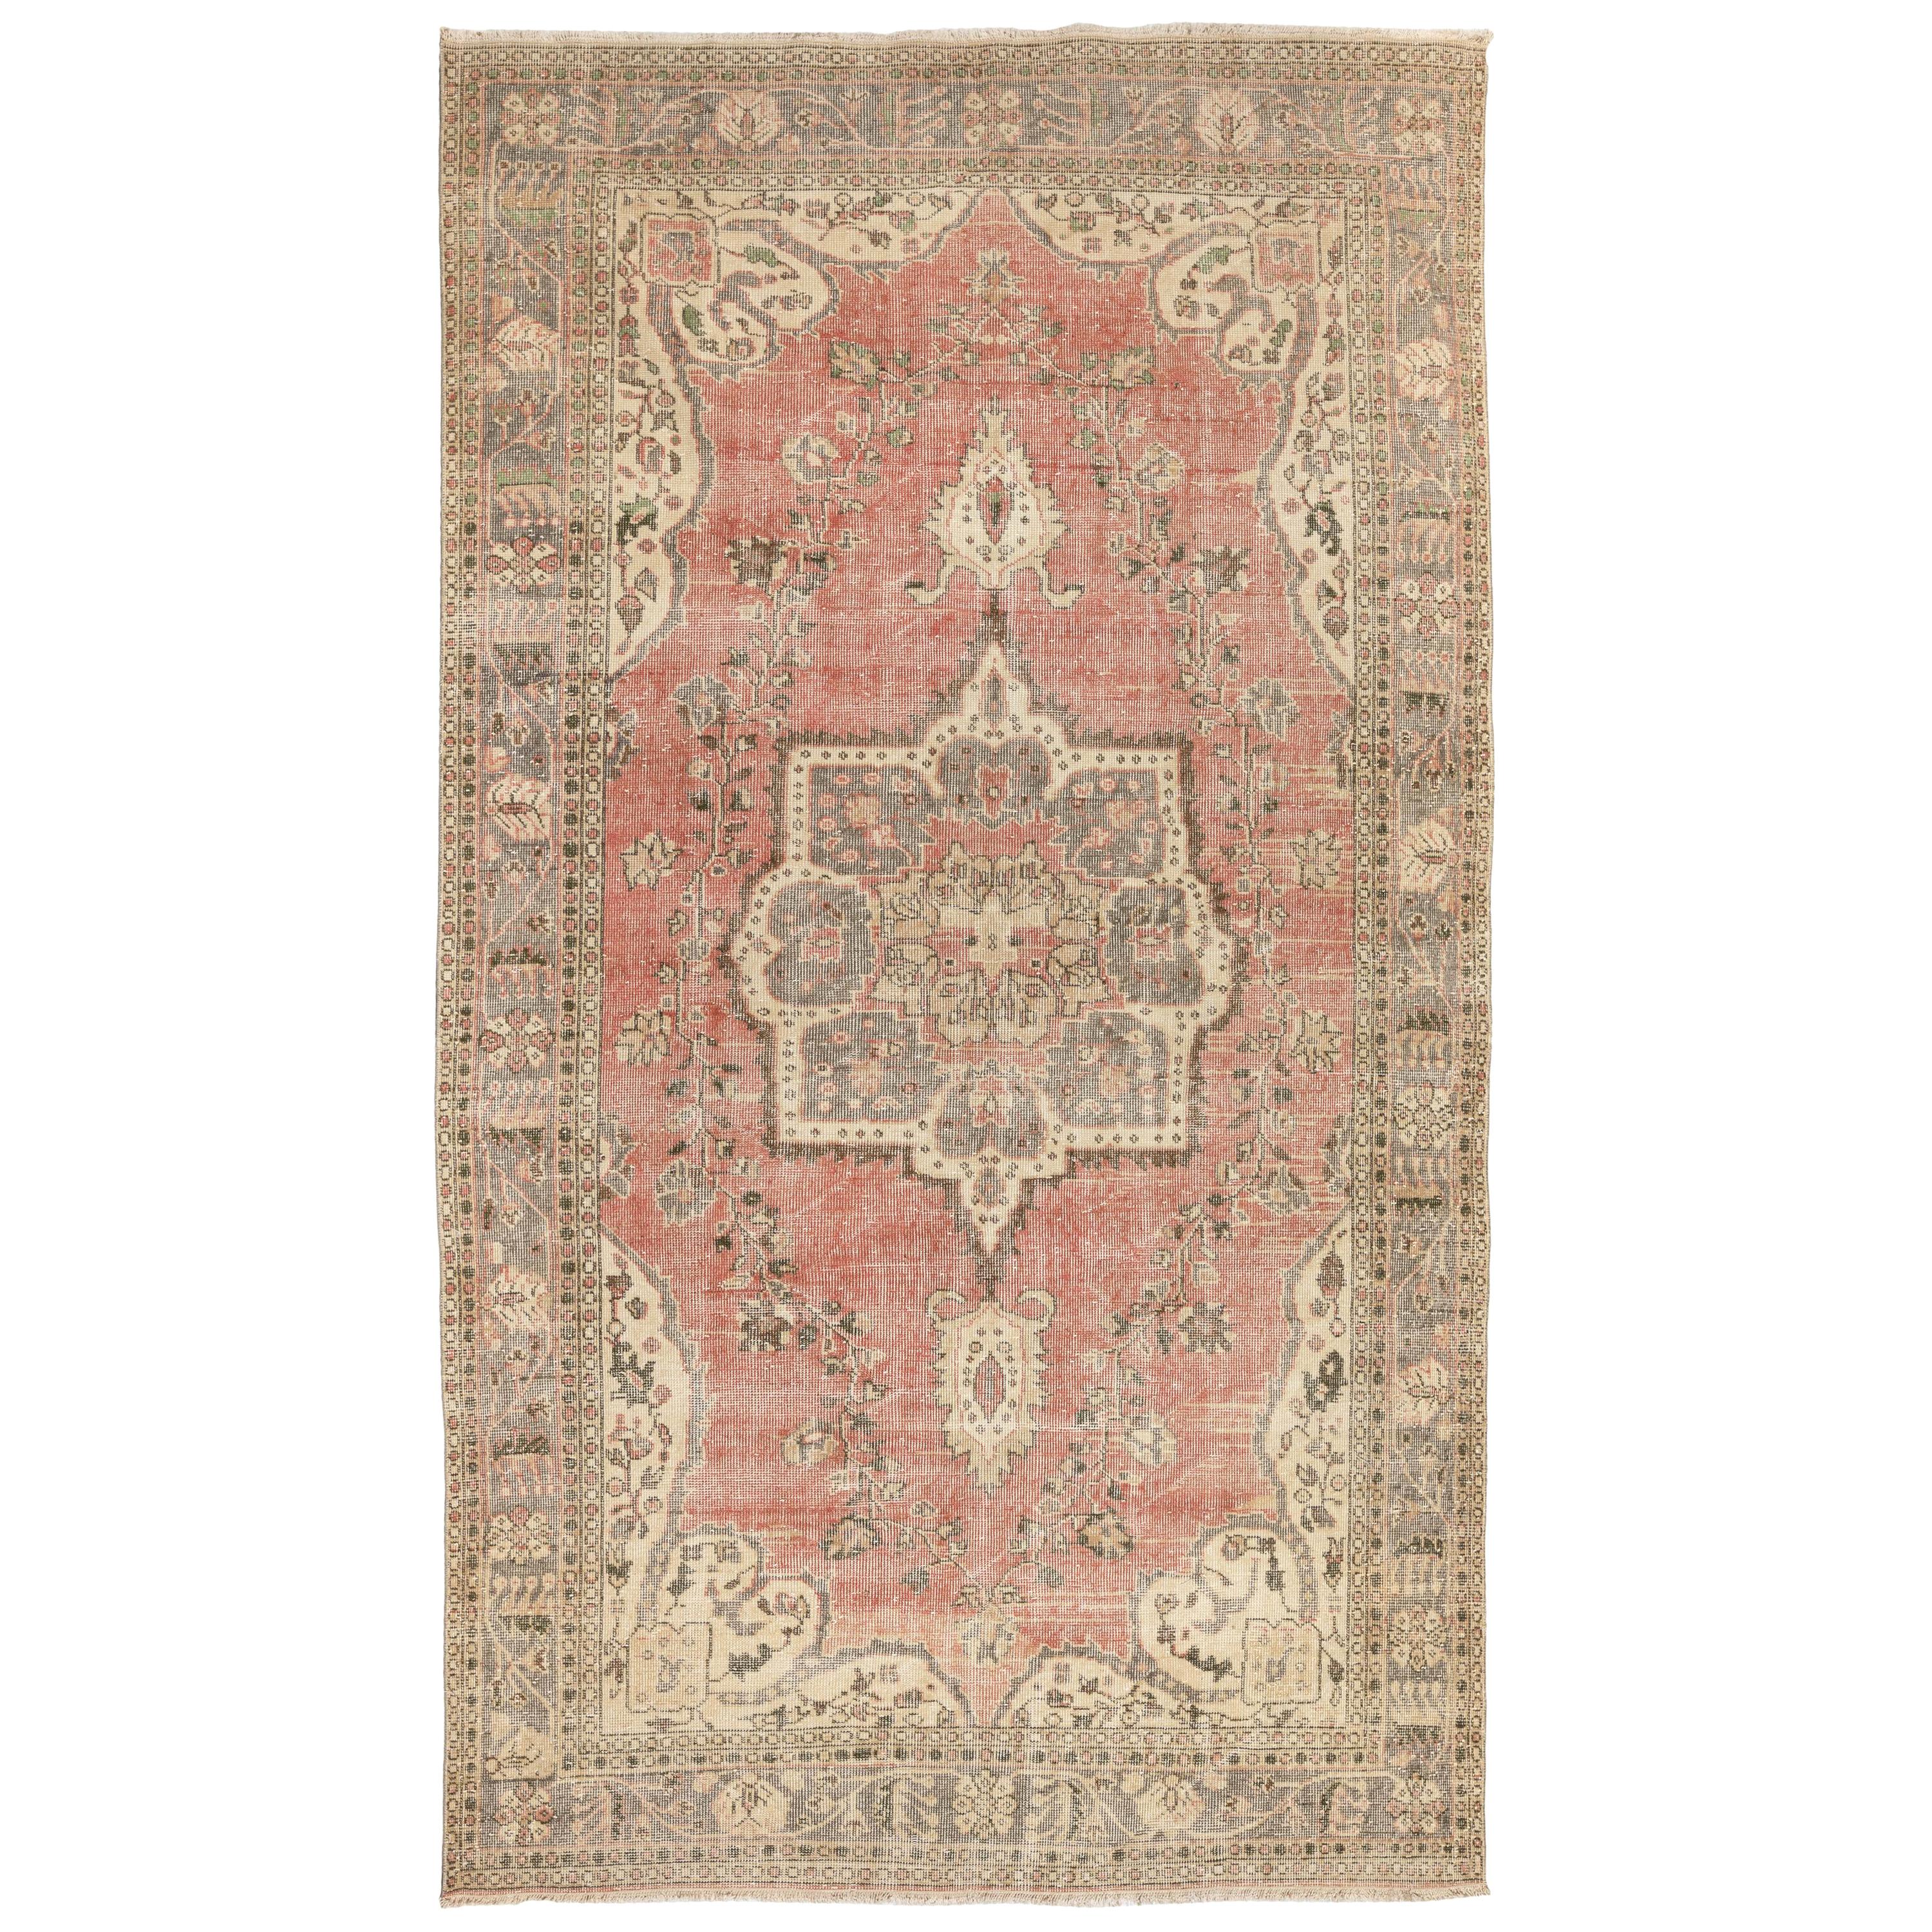 5.7x9.8 Ft Vintage Anatolian Village Area Rug, Woolen Hand-Knotted Carpet